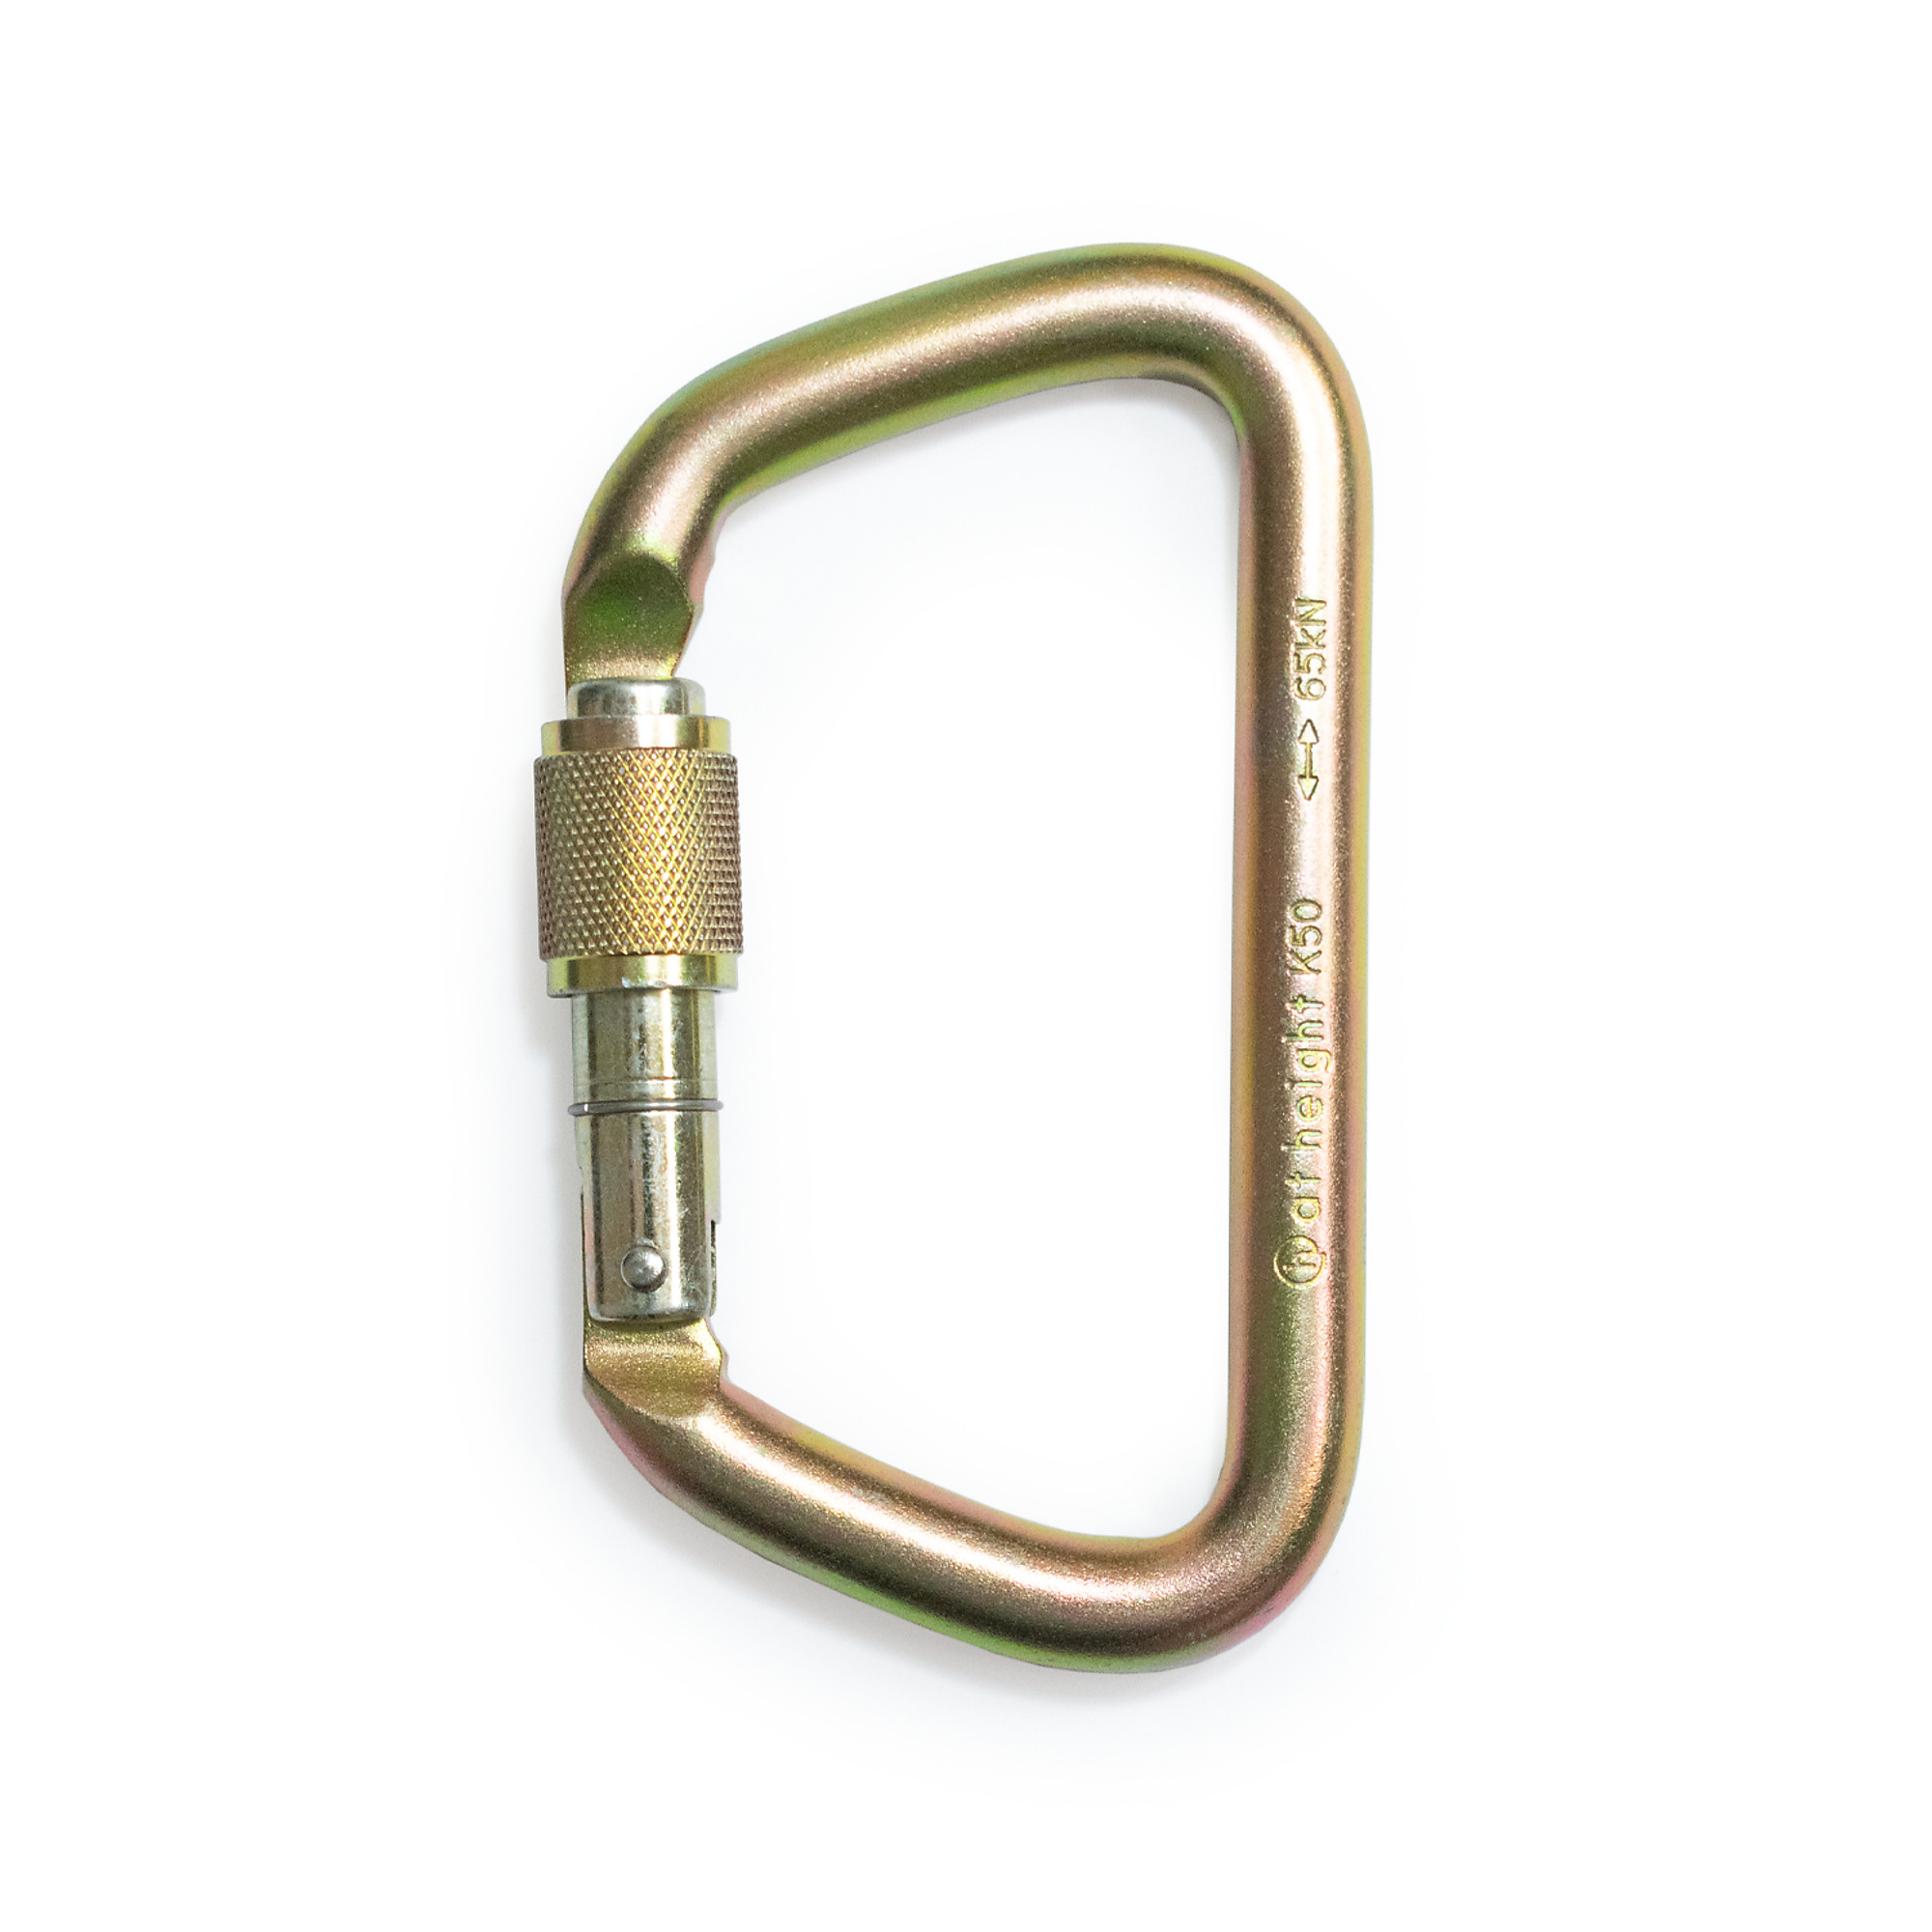 Portable Winch, STEEL LOCKING CARABINER, Max. Capacity 14612 lb, Model 17068521